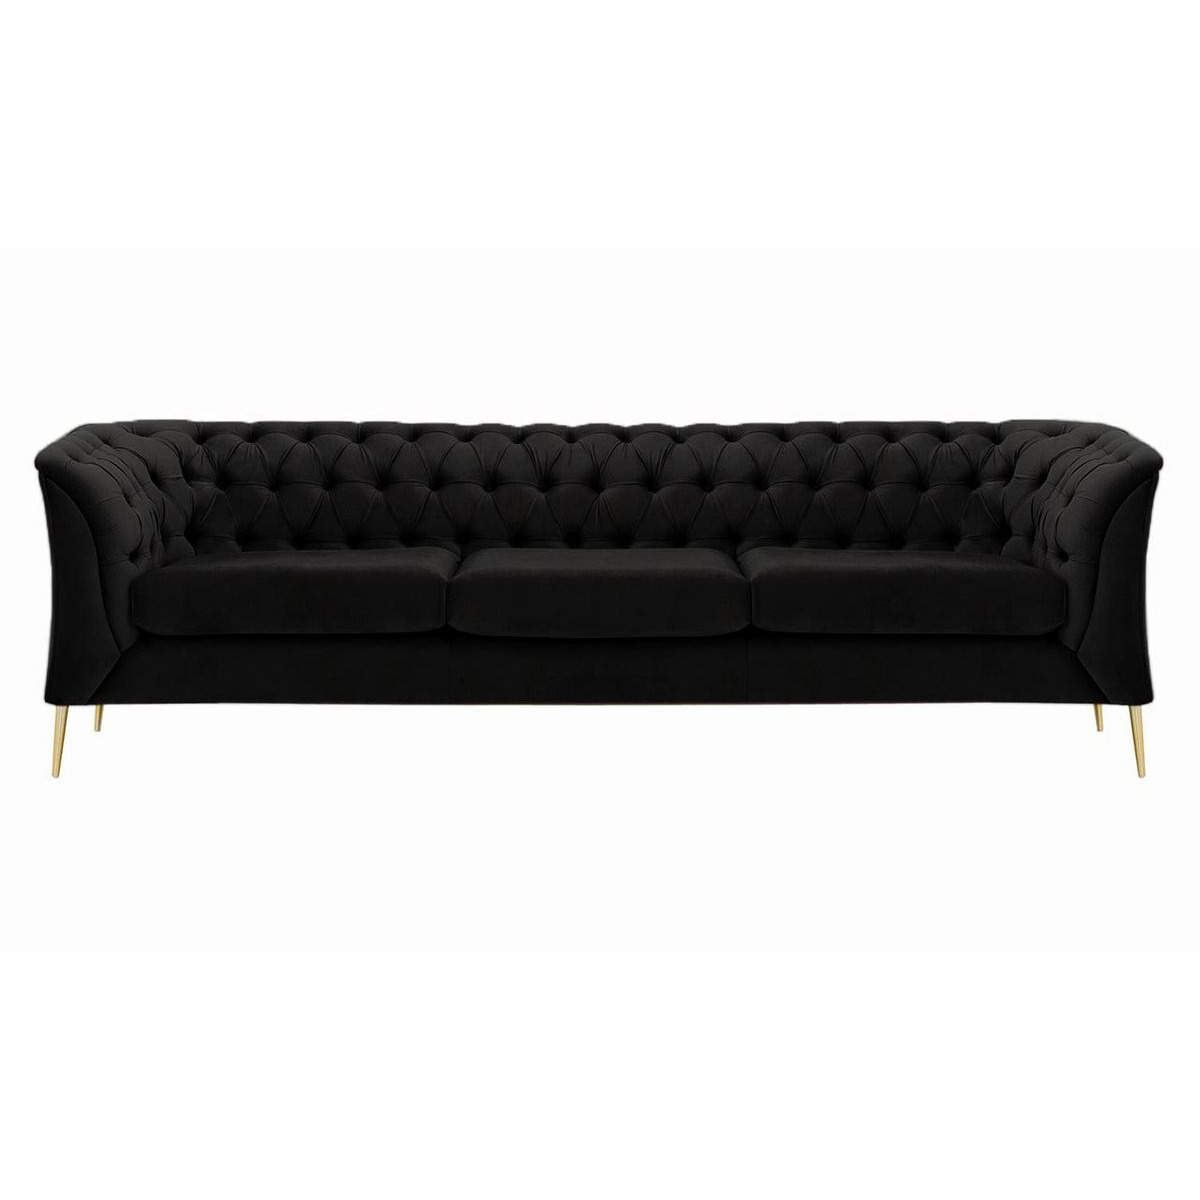 Chesterfield Modern 3 Seater Sofa, black, Leg colour: gold metal - image 1